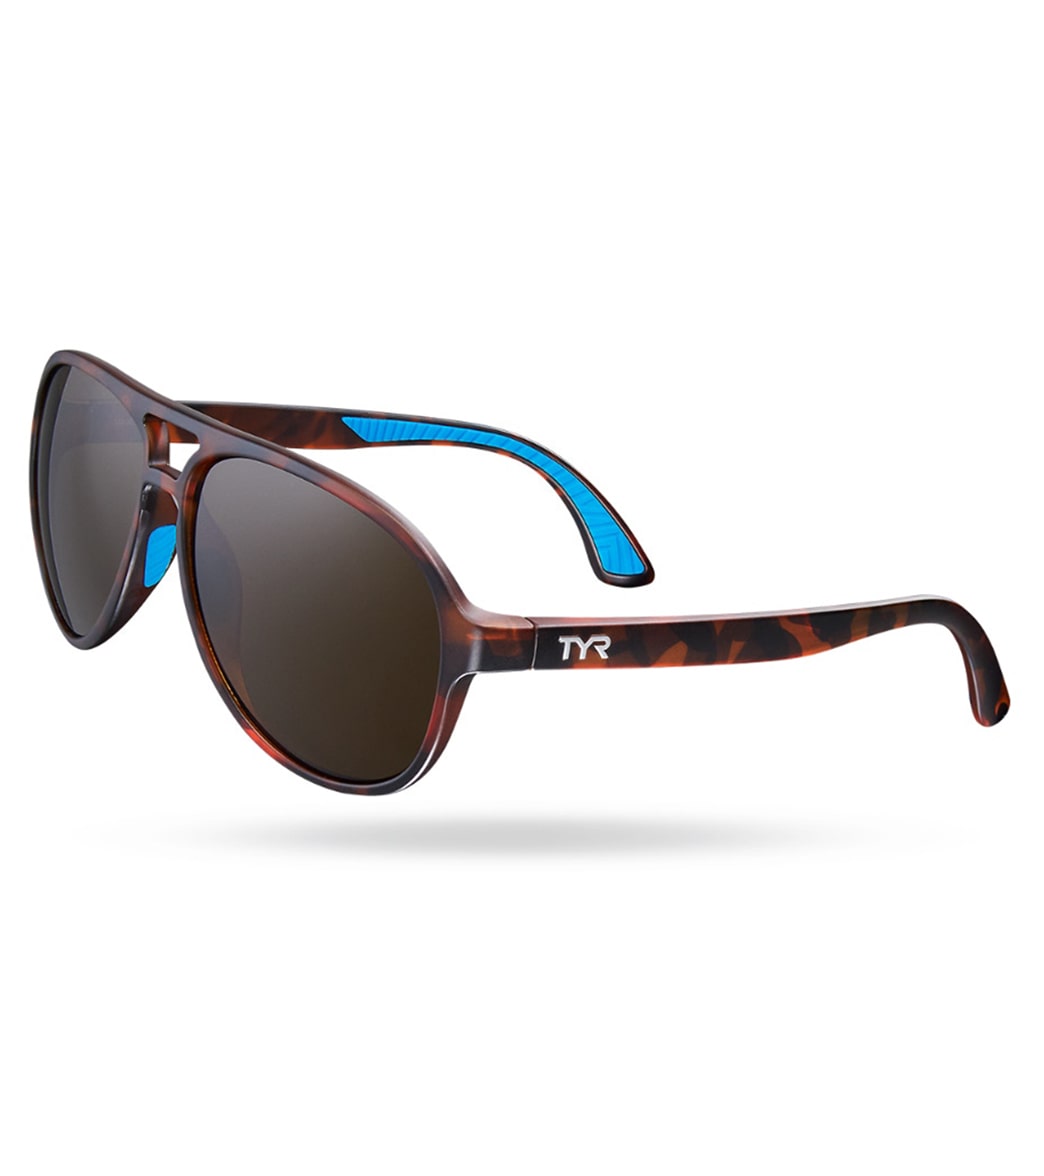 TYR Men's Goldenwest Aviator Large Sunglasses - Brown/Tort - Swimoutlet.com